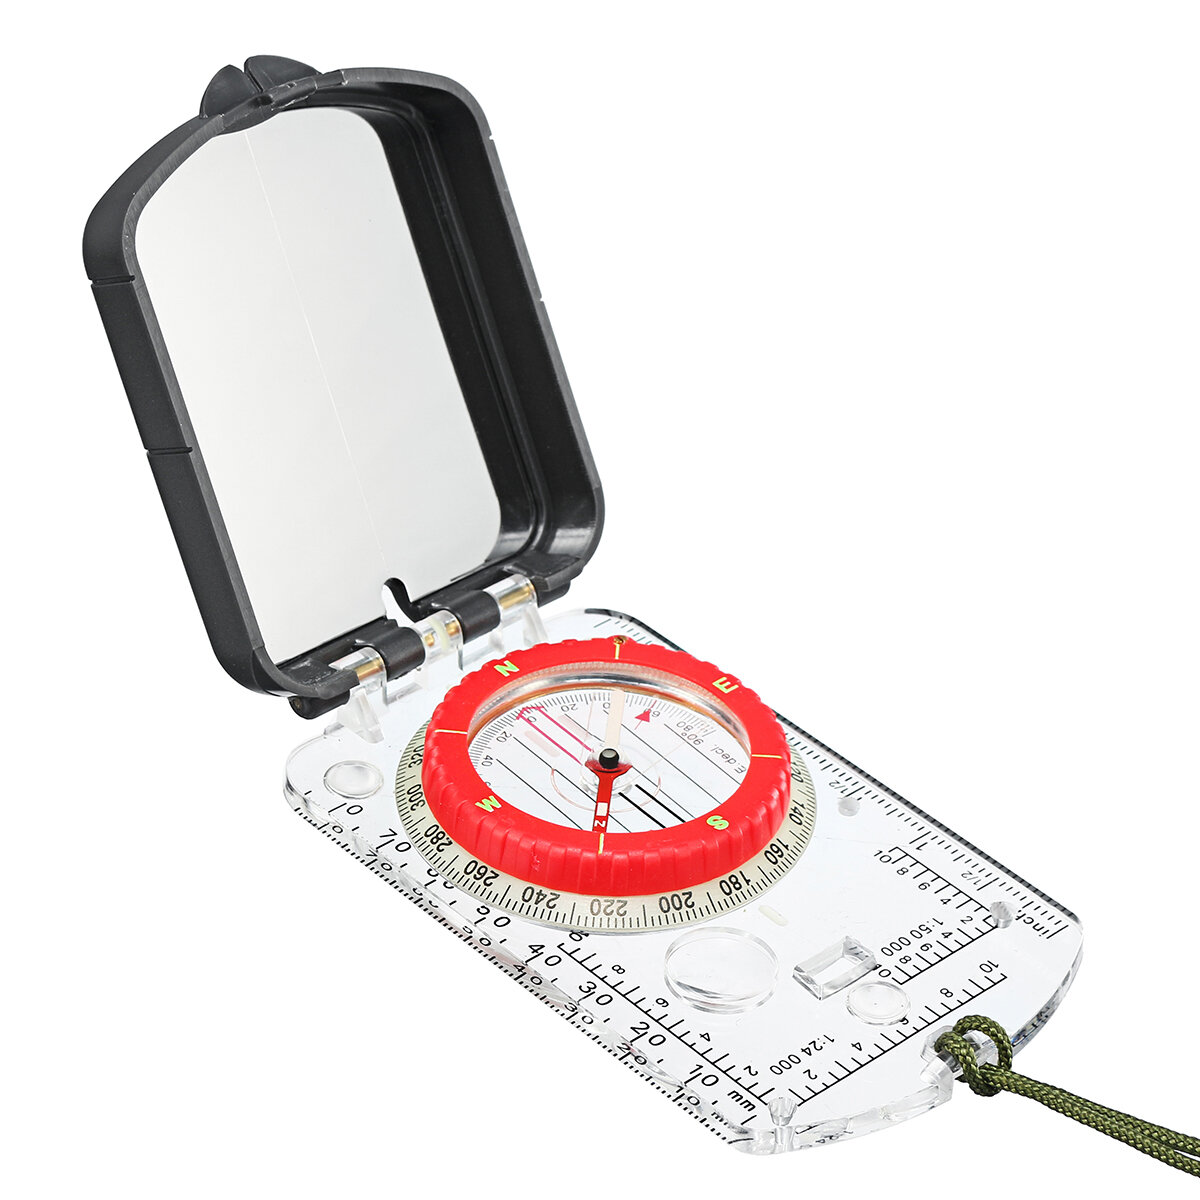 New Professional Pocket Military Compass Compact Baseplate Pocket Hiking Sighting Walking LED light